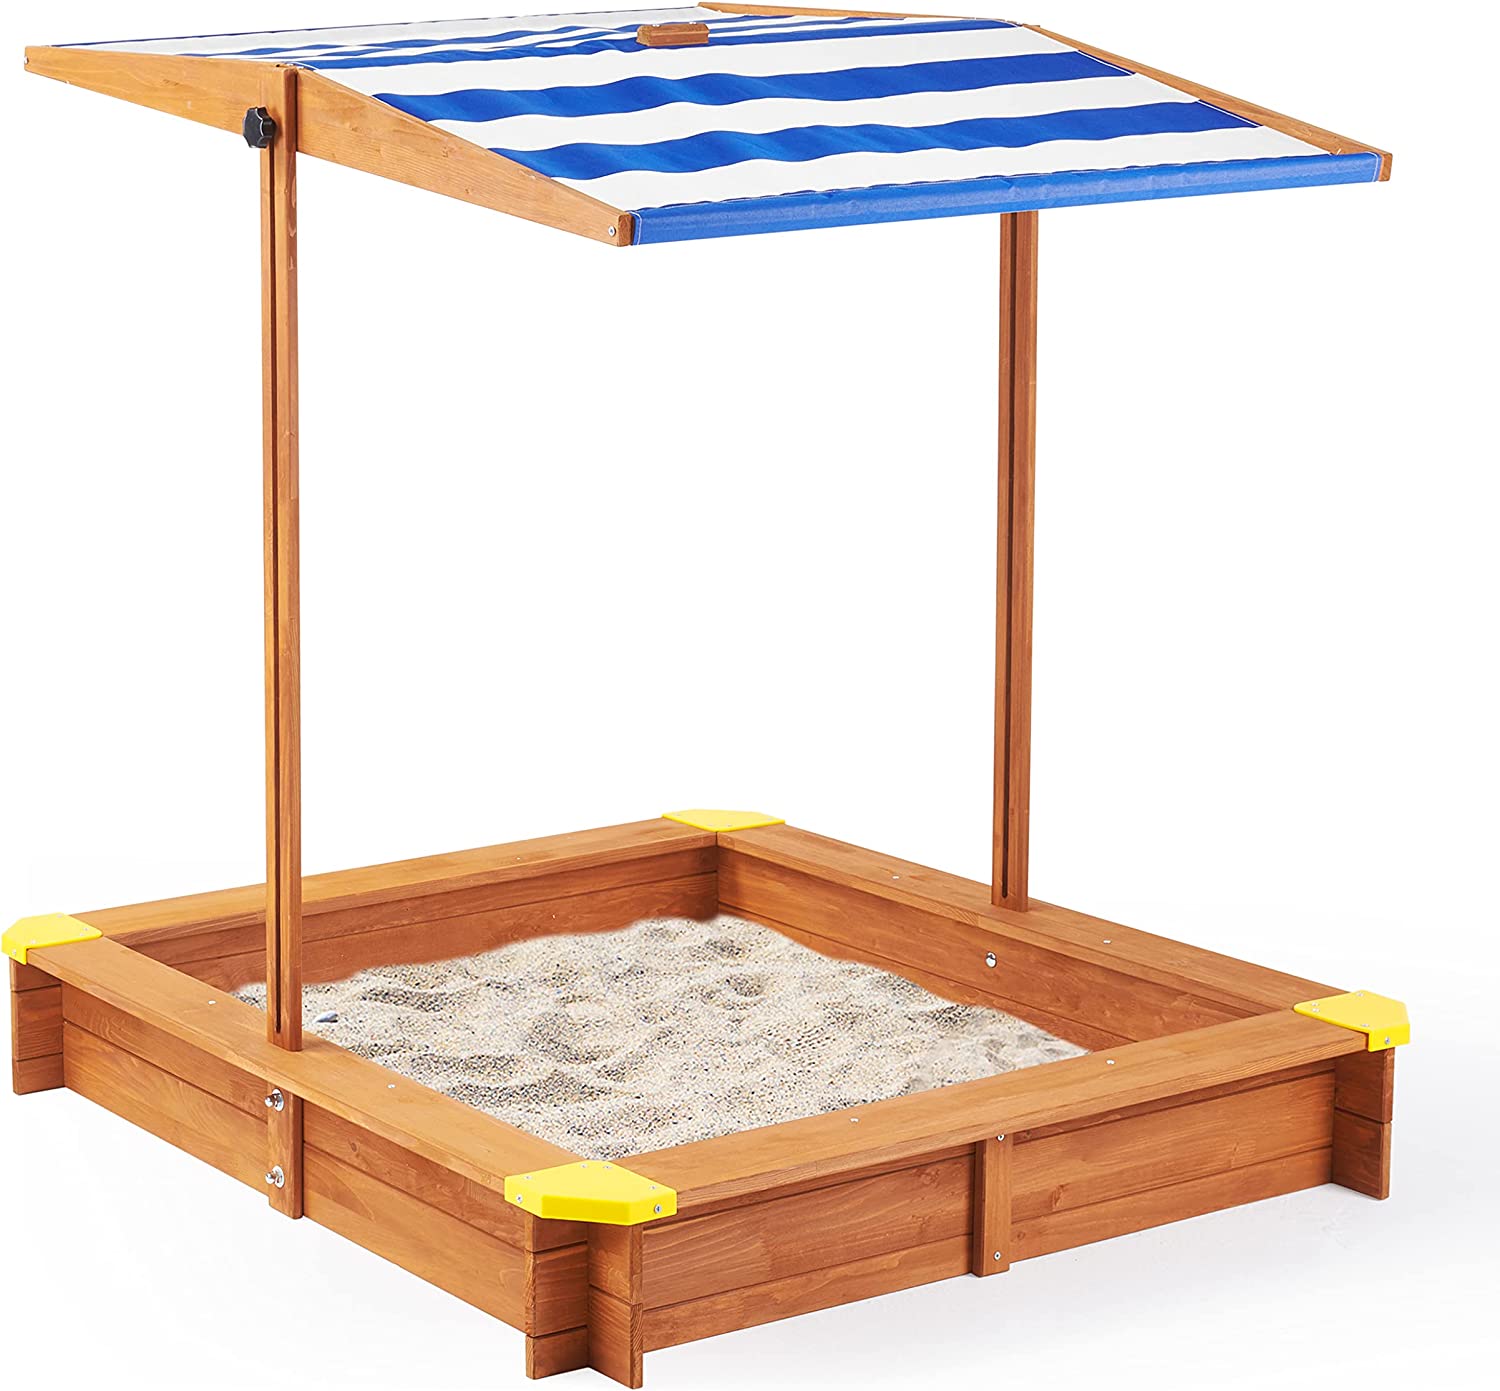 SoliWood Cedar ATSM-Certified Covered Sandbox